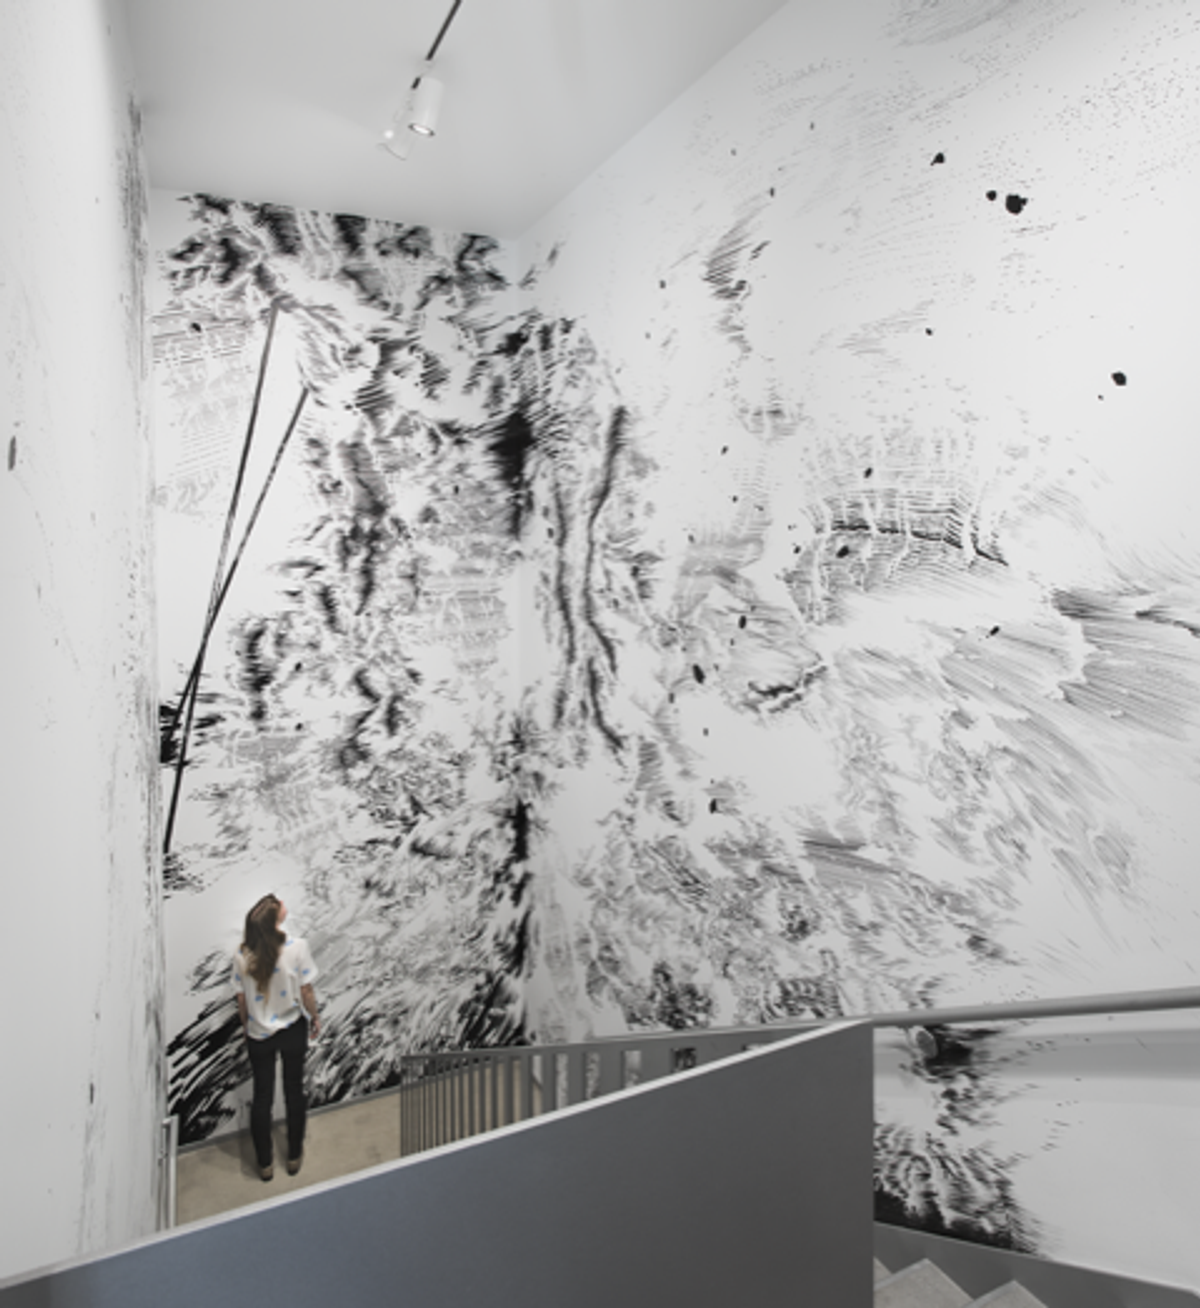 Abdelkader Benchamma, Representation of Dark Matter. Inauguration du programme de dessin mural du Drawing Center de New York en 2015. Photo : Drawing Center. Courtesy de l’artiste

